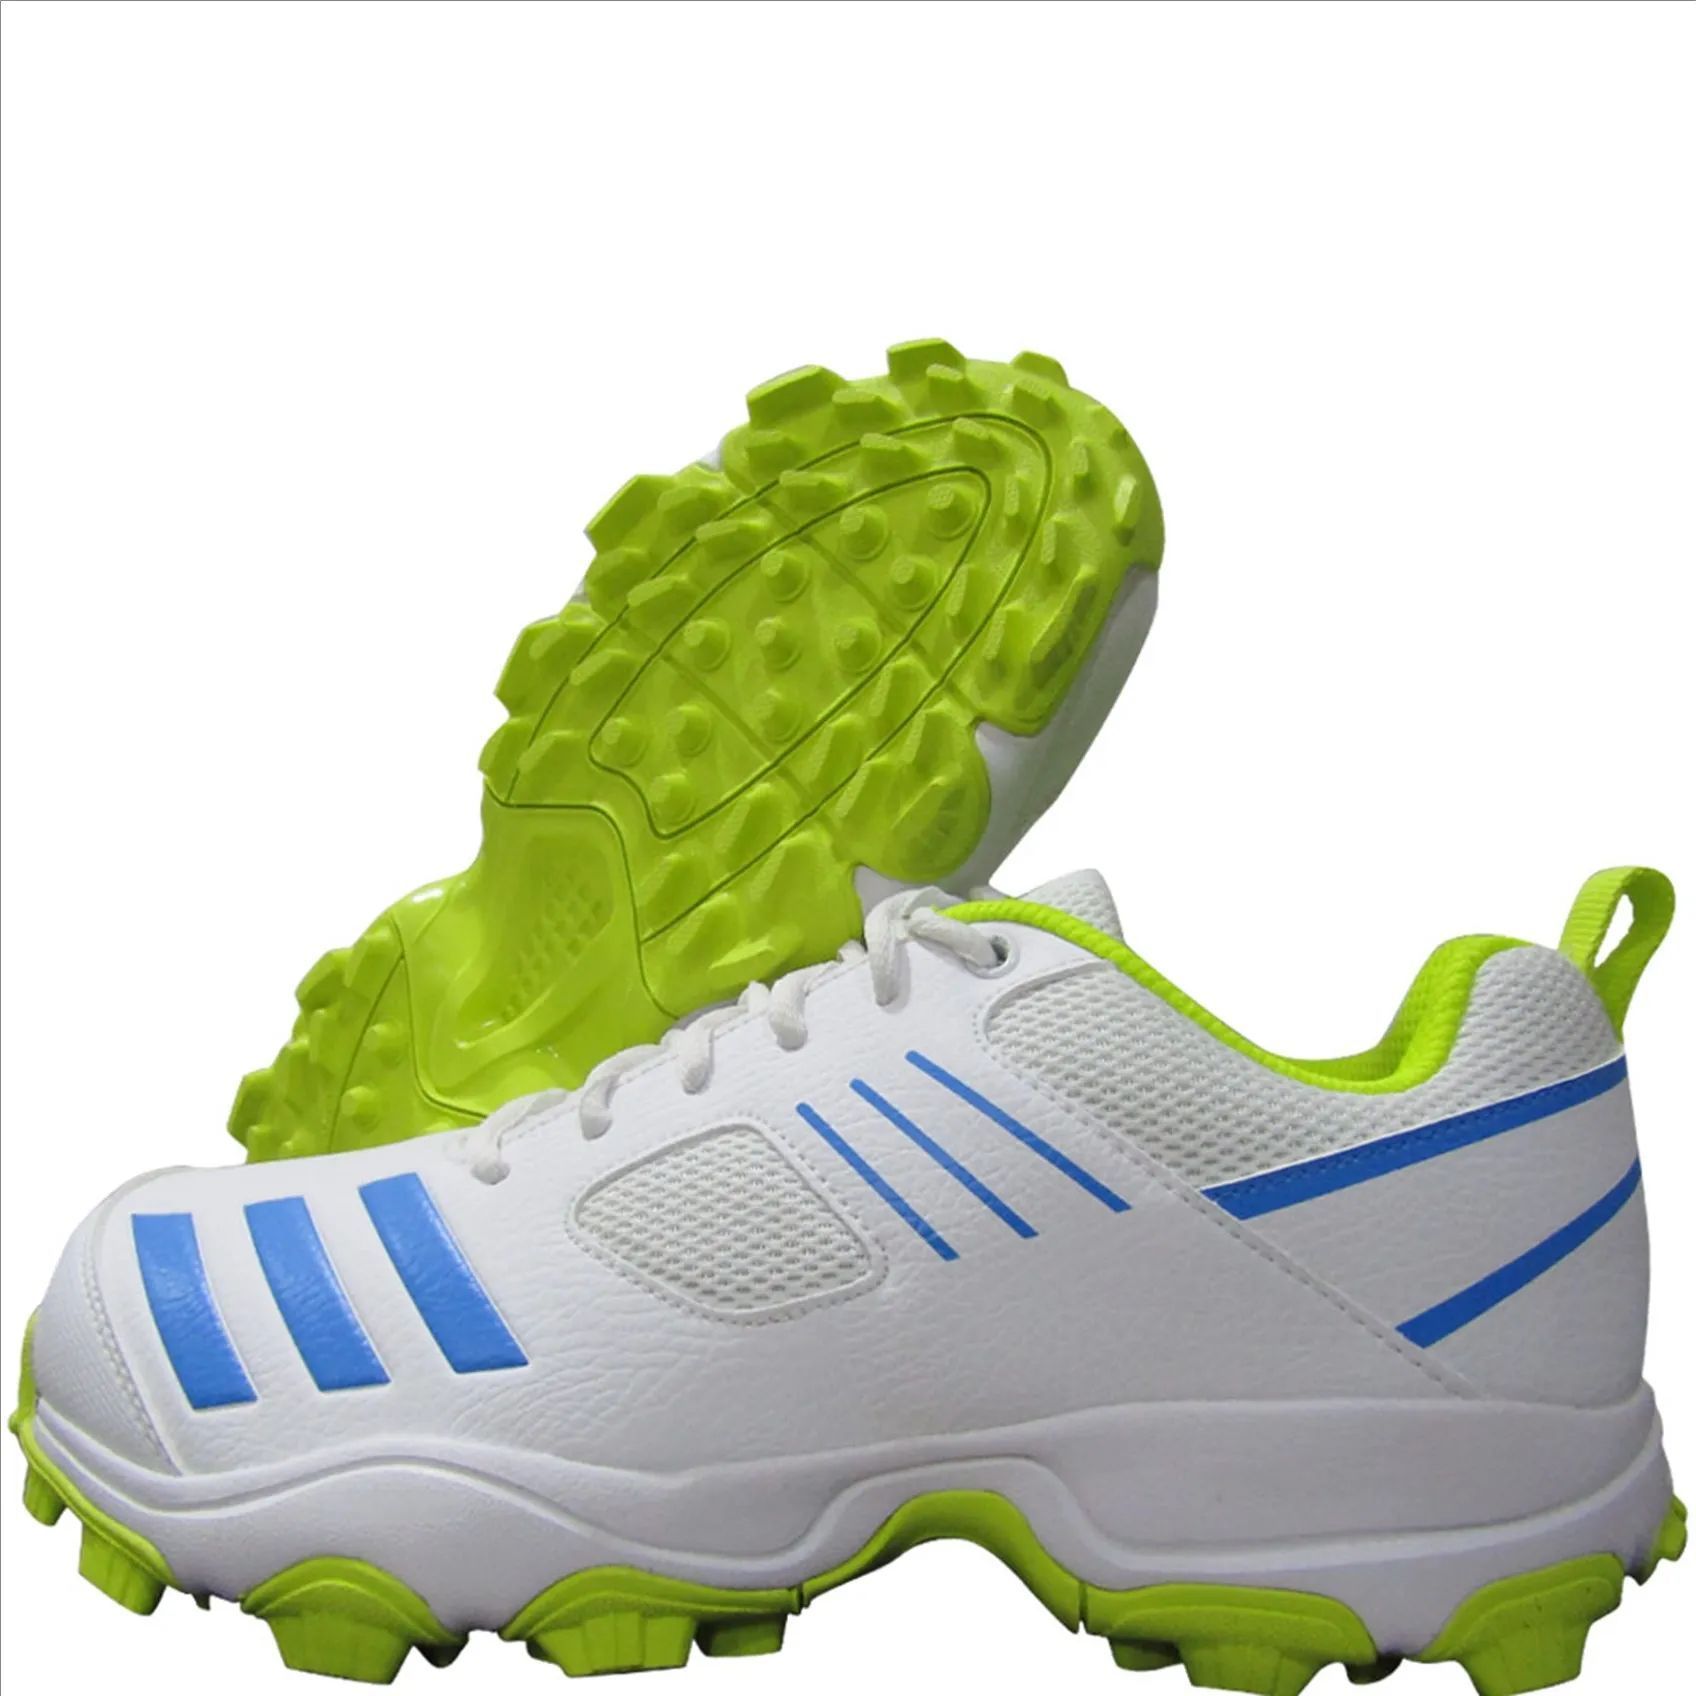 Adidas Mens Crihase Stud Cricket Shoes FTW White Pul Blue Aciyel